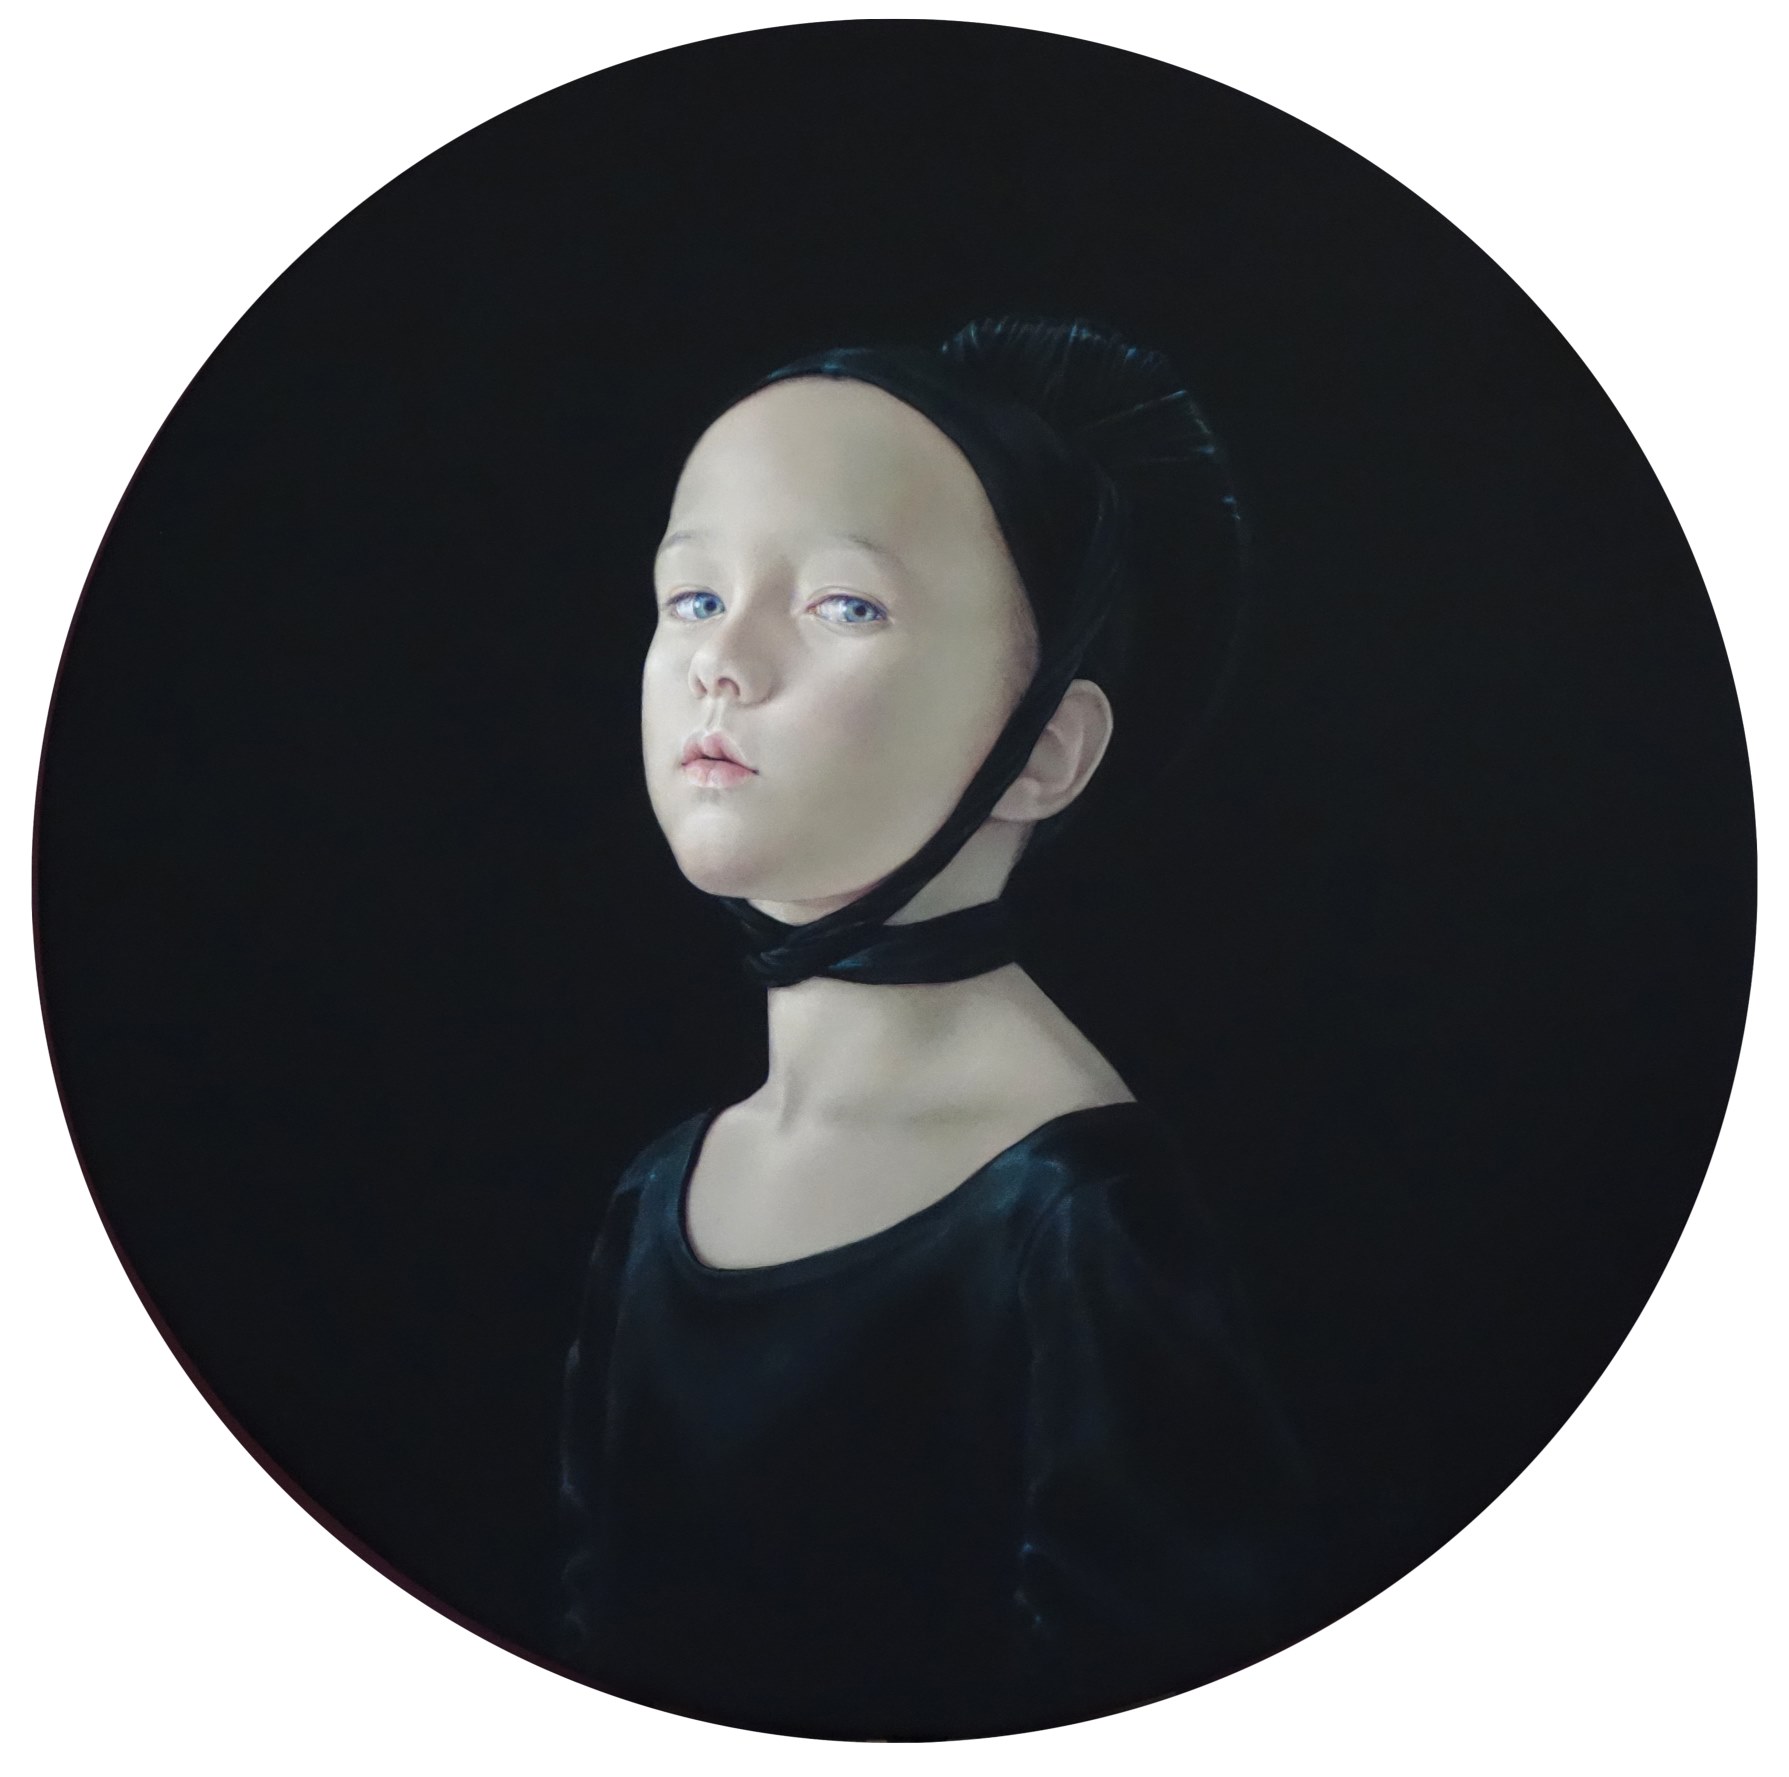 o.T. (black painting) 2015